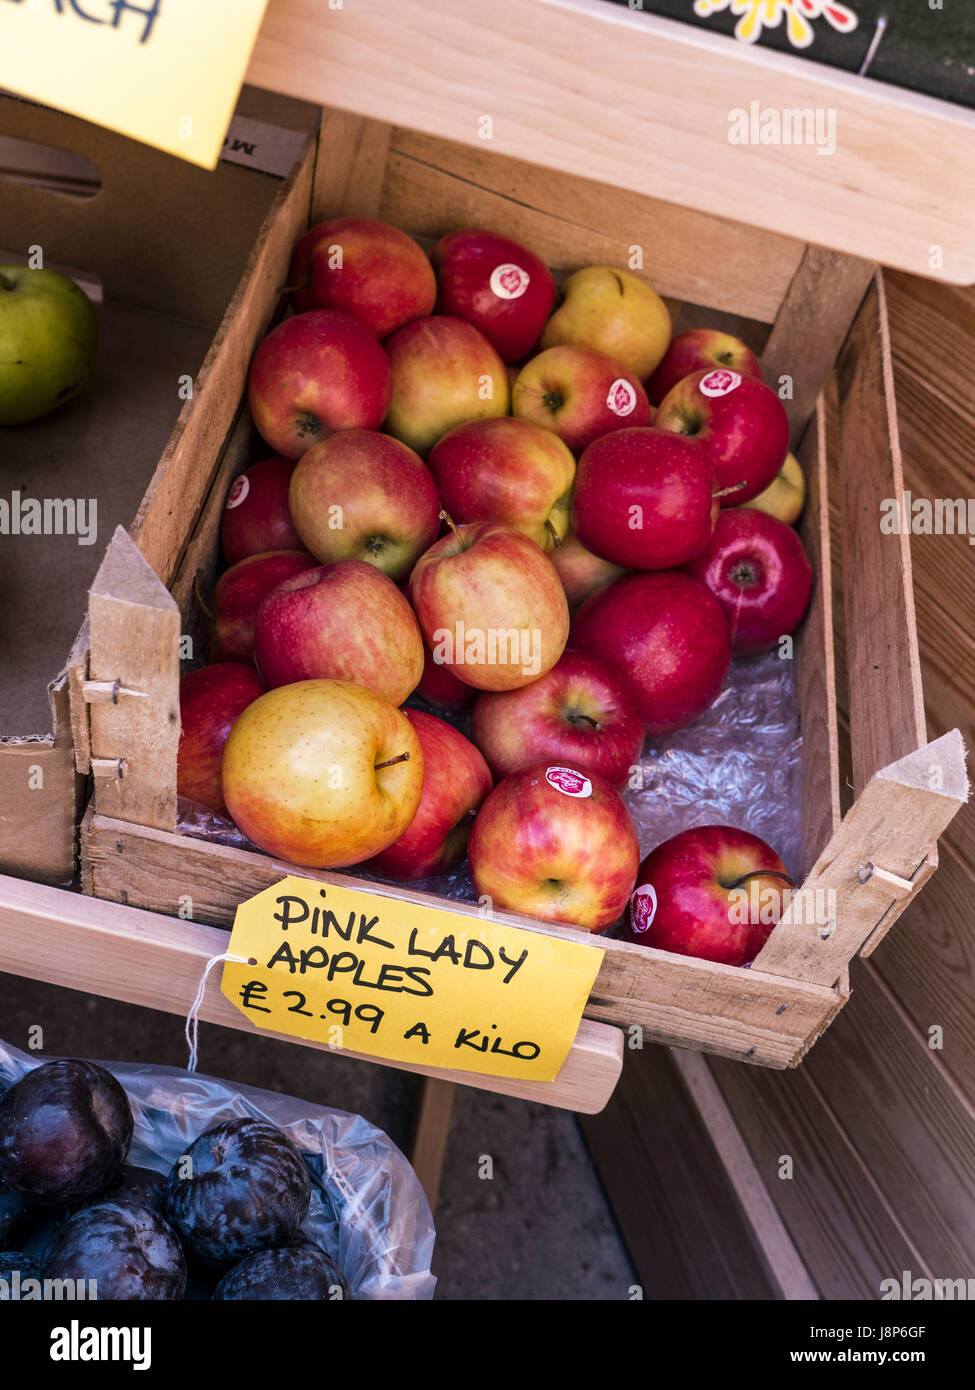 https://c8.alamy.com/comp/J8P6GF/pink-lady-apples-in-dorset-crate-on-display-for-sale-at-299-per-kilo-J8P6GF.jpg